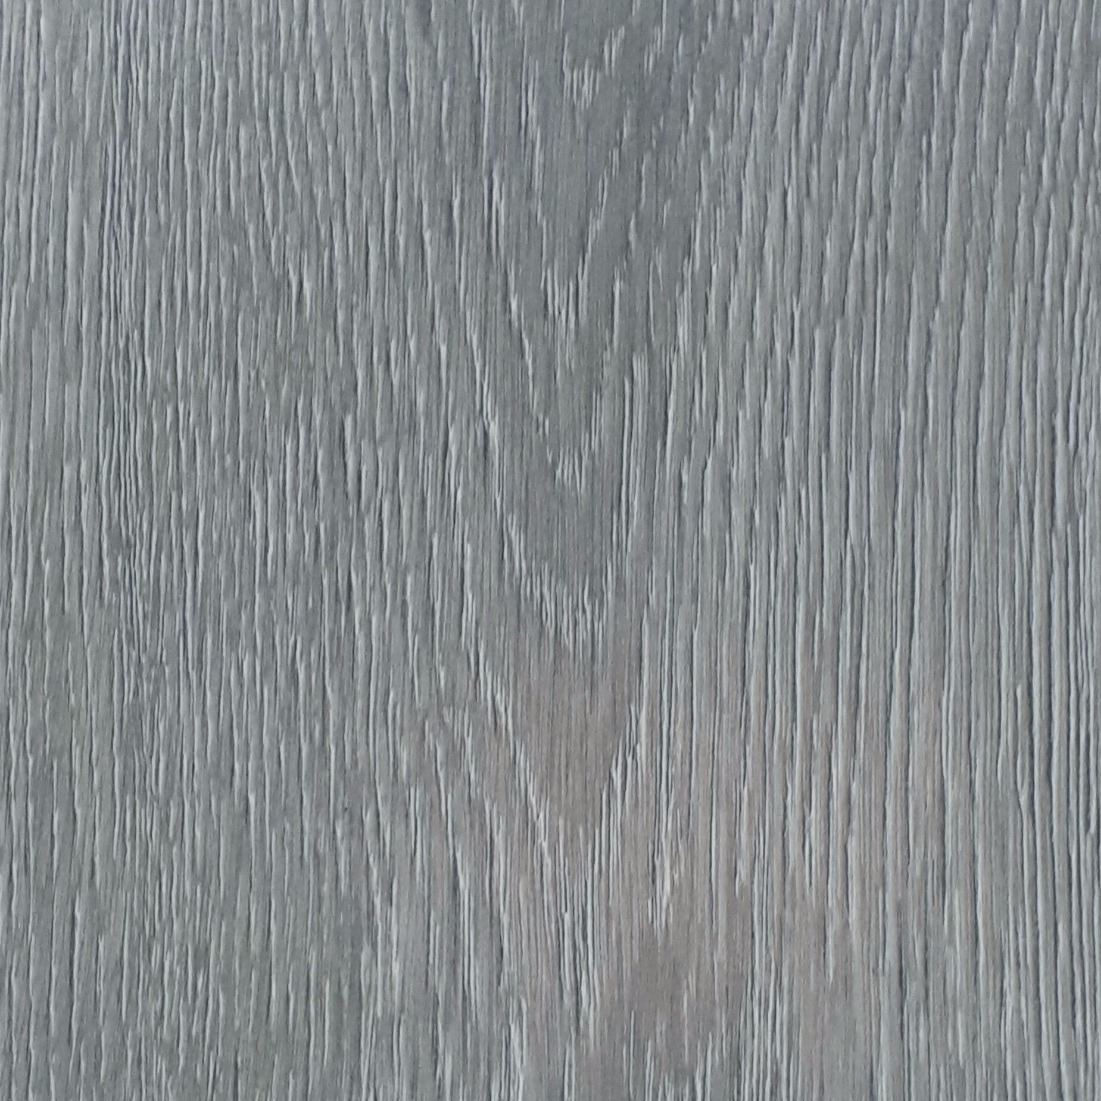 Ламинат Titanium Дуб морозный 137,7х19х0,8 см ламинат tarkett timber lumber дуб морозный